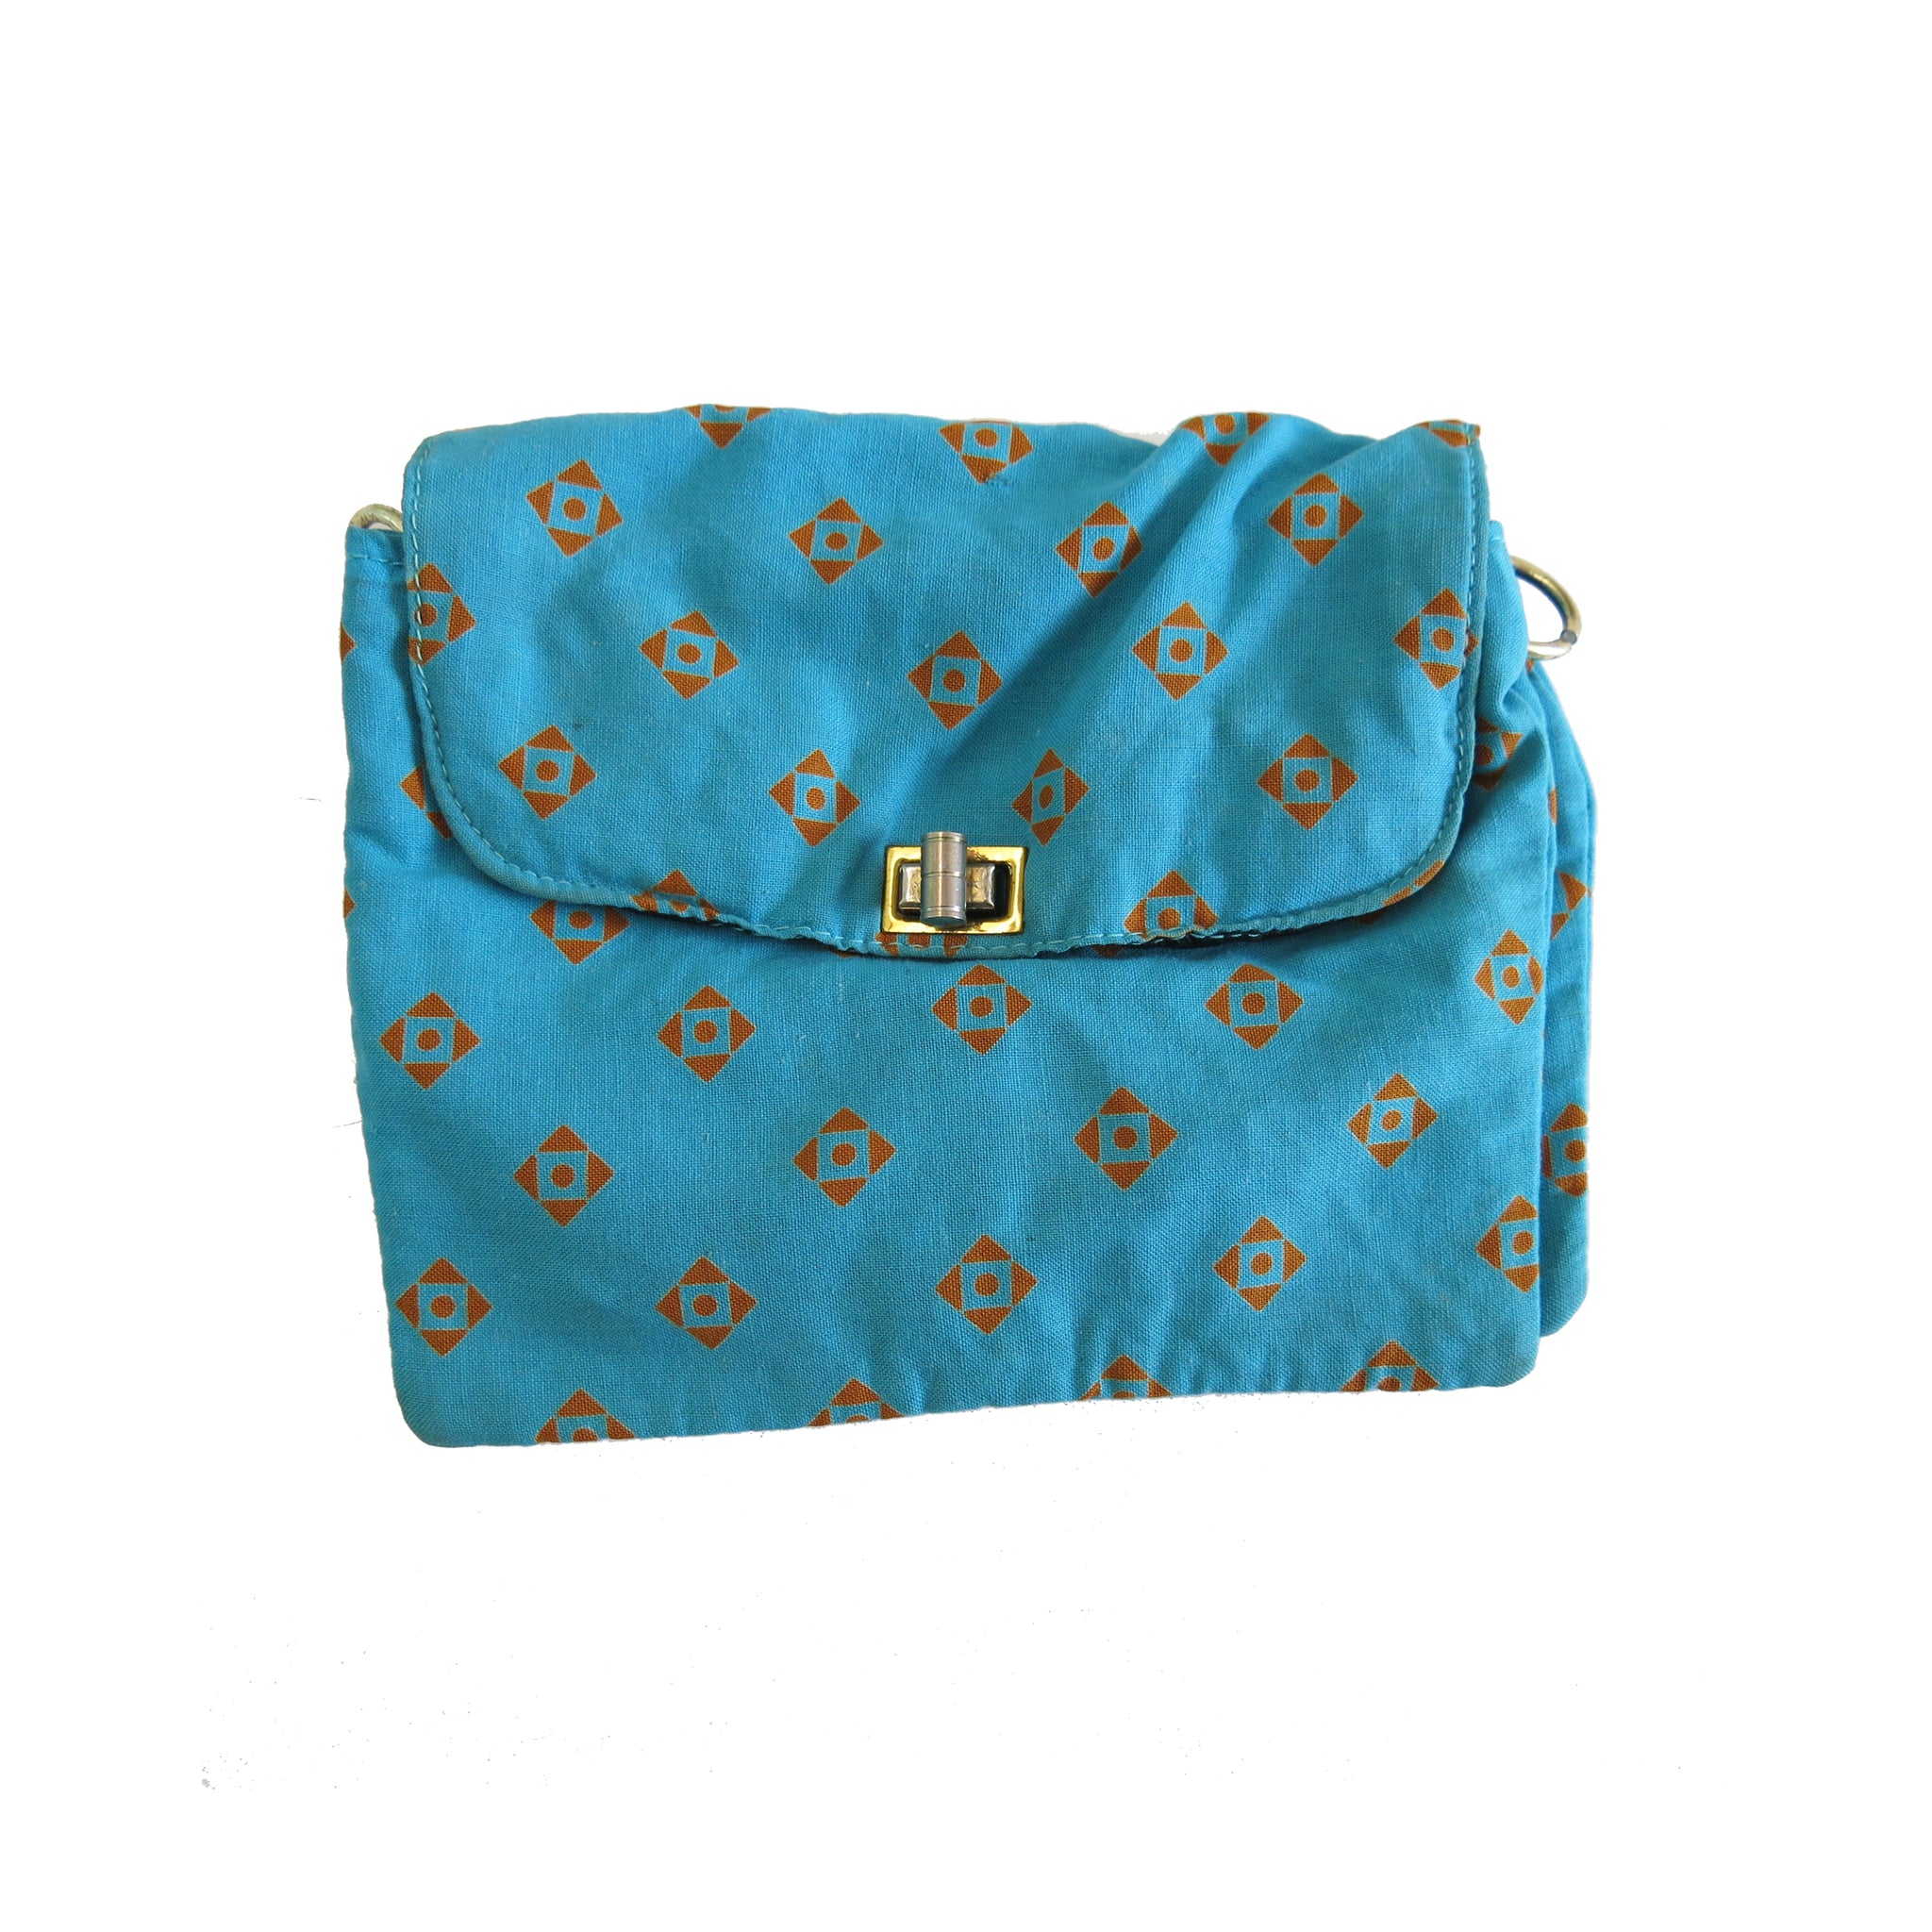 BIBA Crossbody Bags & Handbags Leather Exterior for Women for sale | eBay